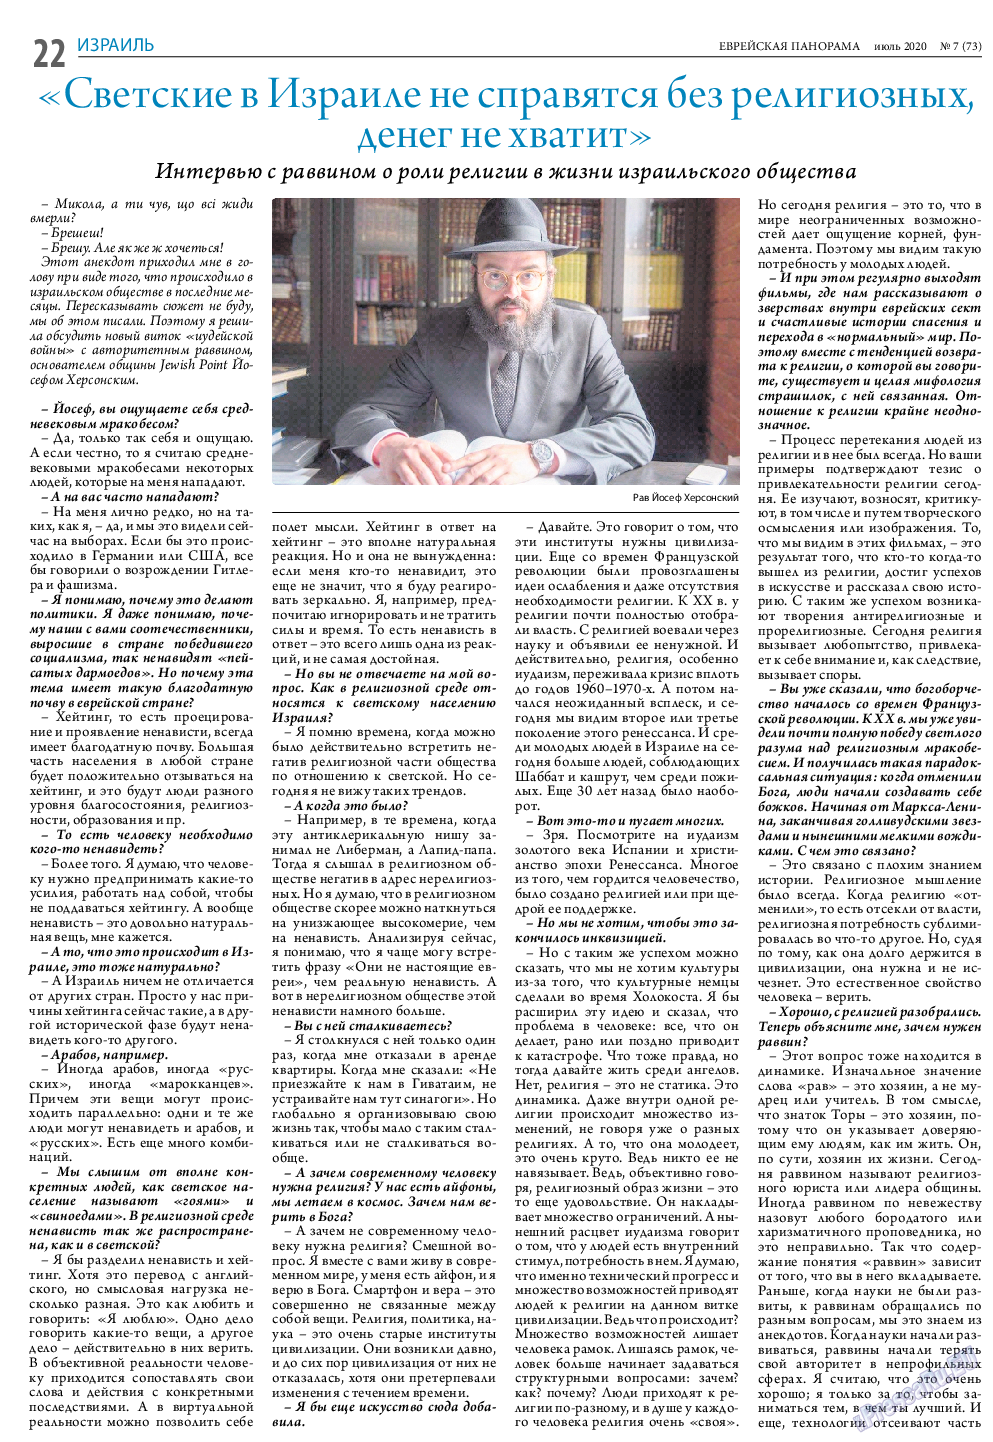 Еврейская панорама, газета. 2020 №7 стр.22